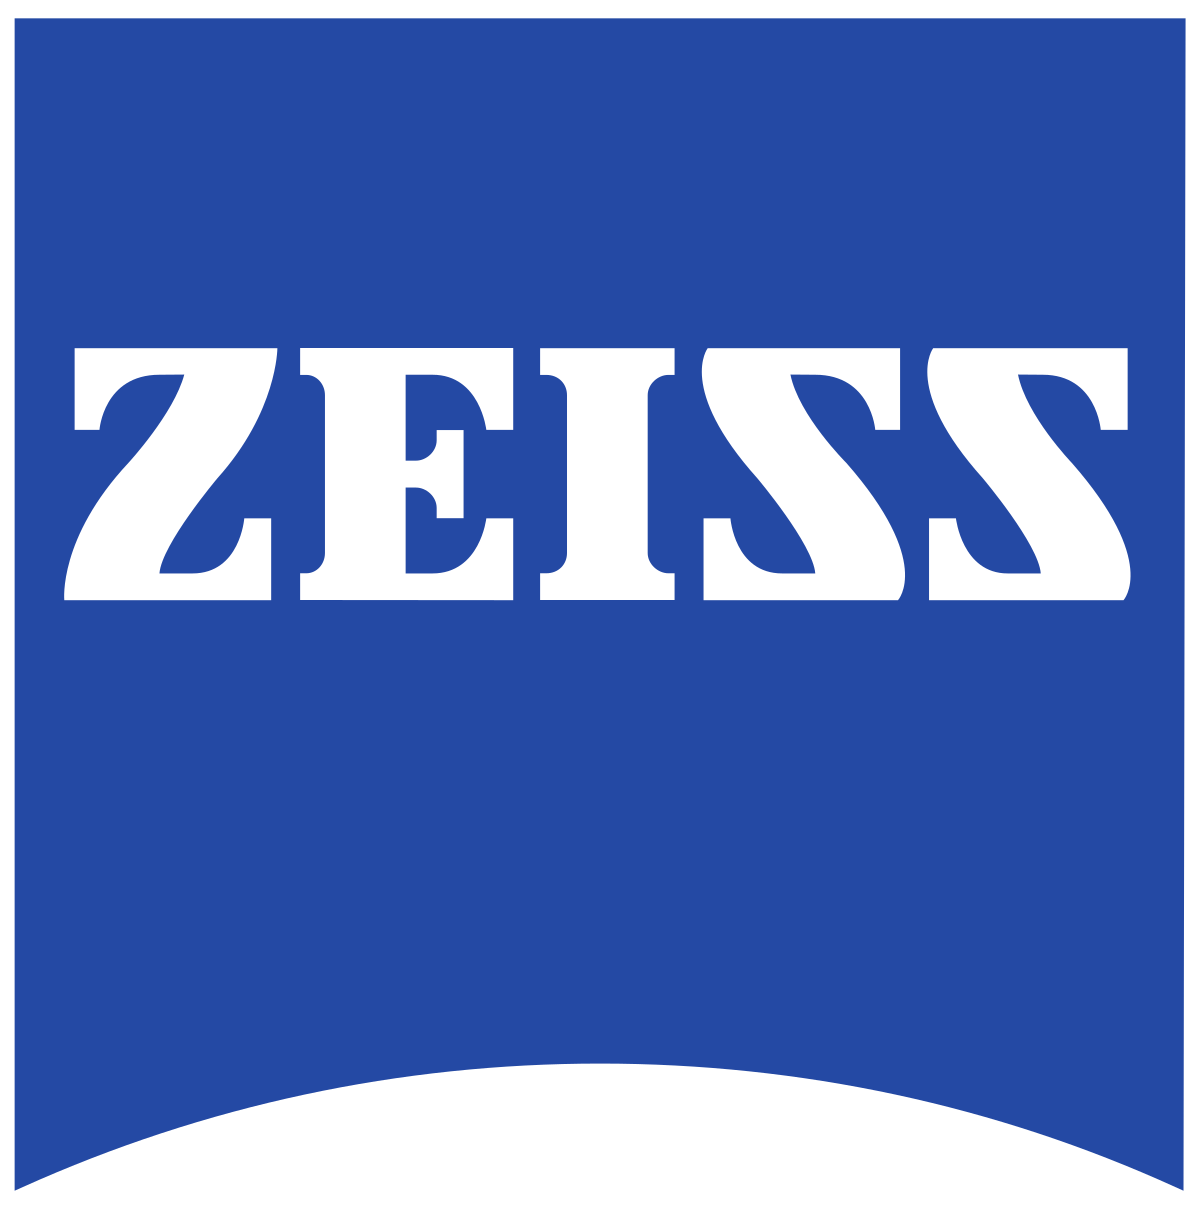 https://markushornig.com/wp-content/uploads/2021/11/1200px-Zeiss_logo.svg.png